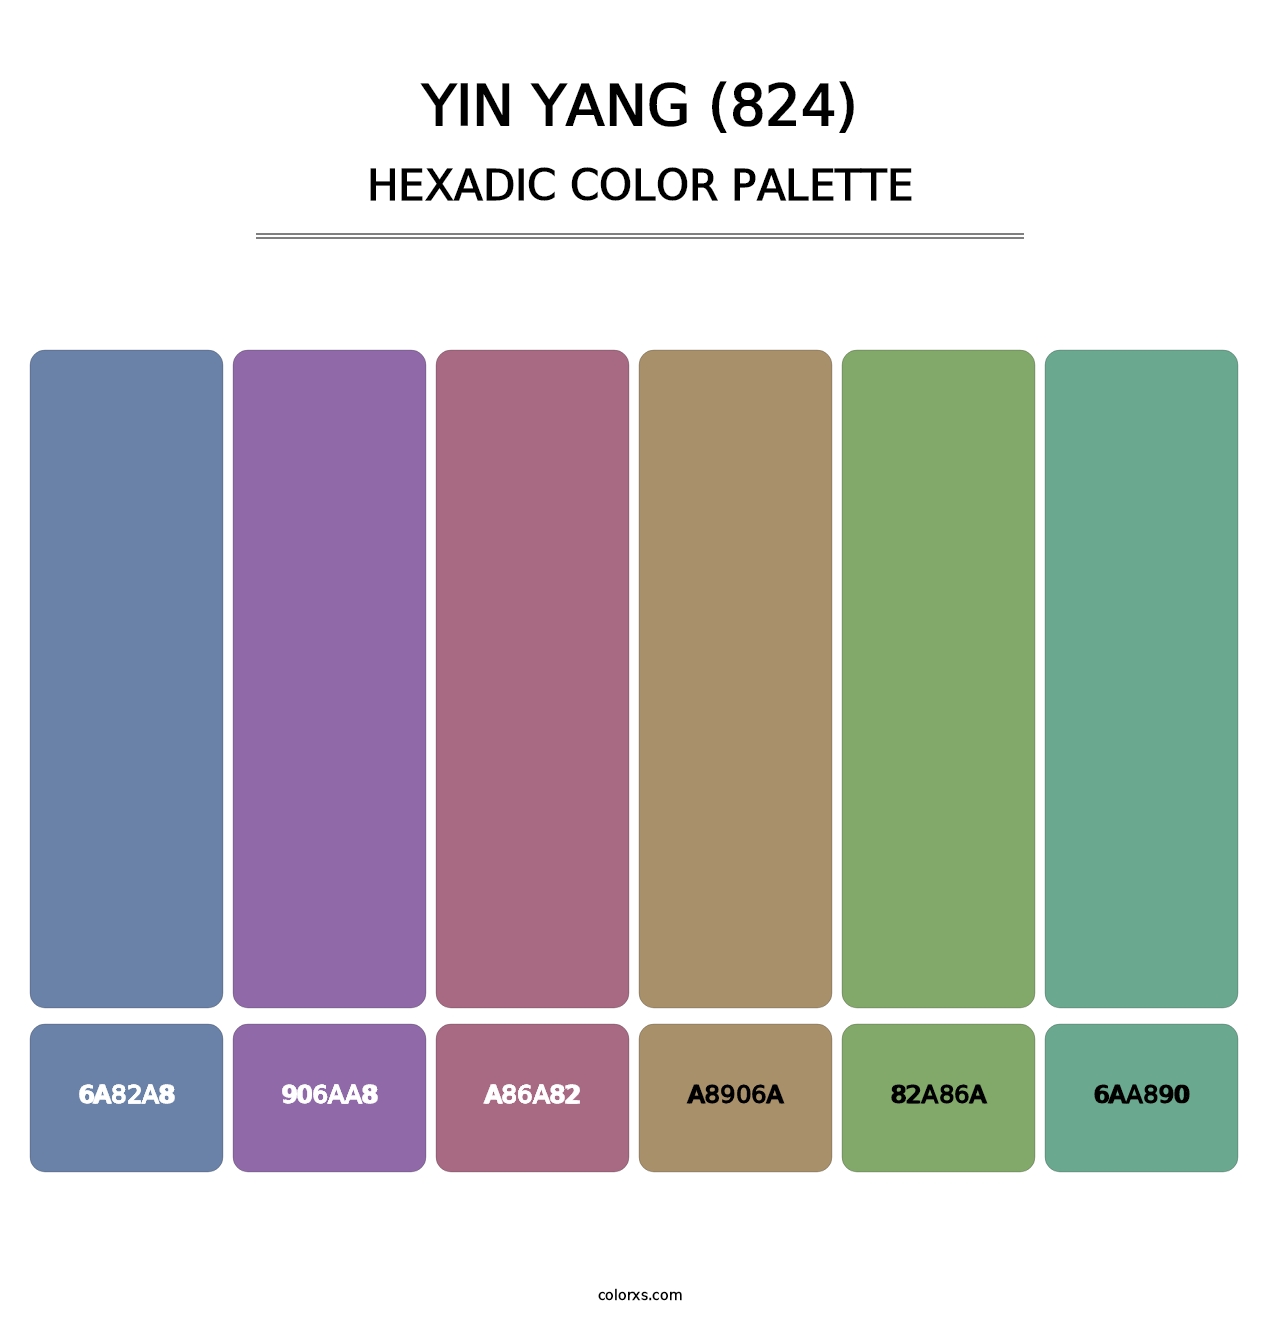 Yin Yang (824) - Hexadic Color Palette